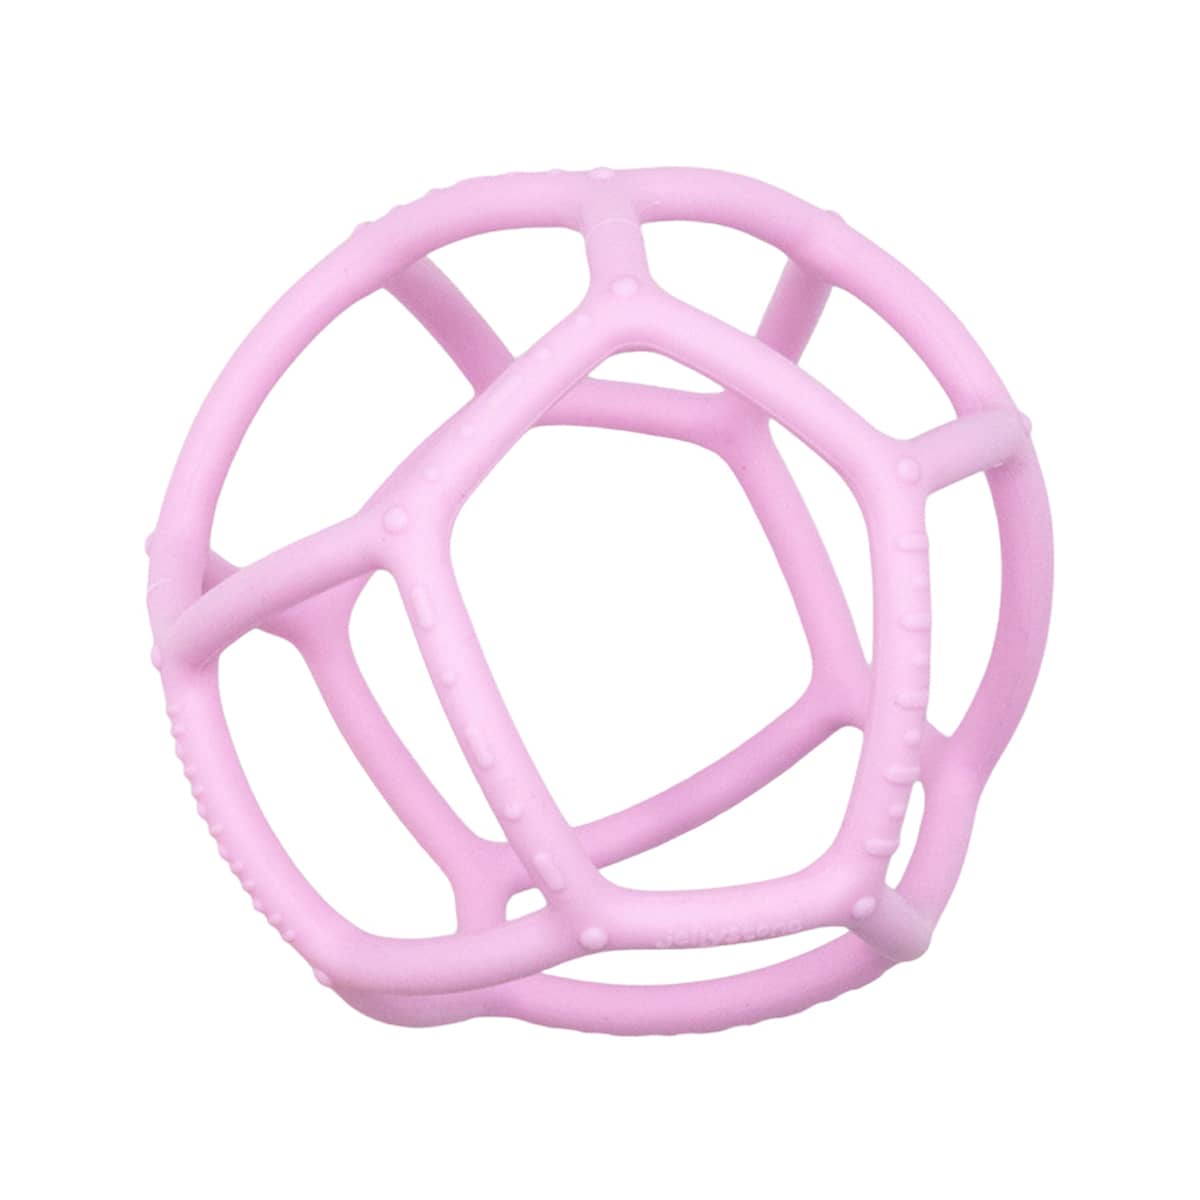 Jellystone Designs Sensory Ball - Bubblegum